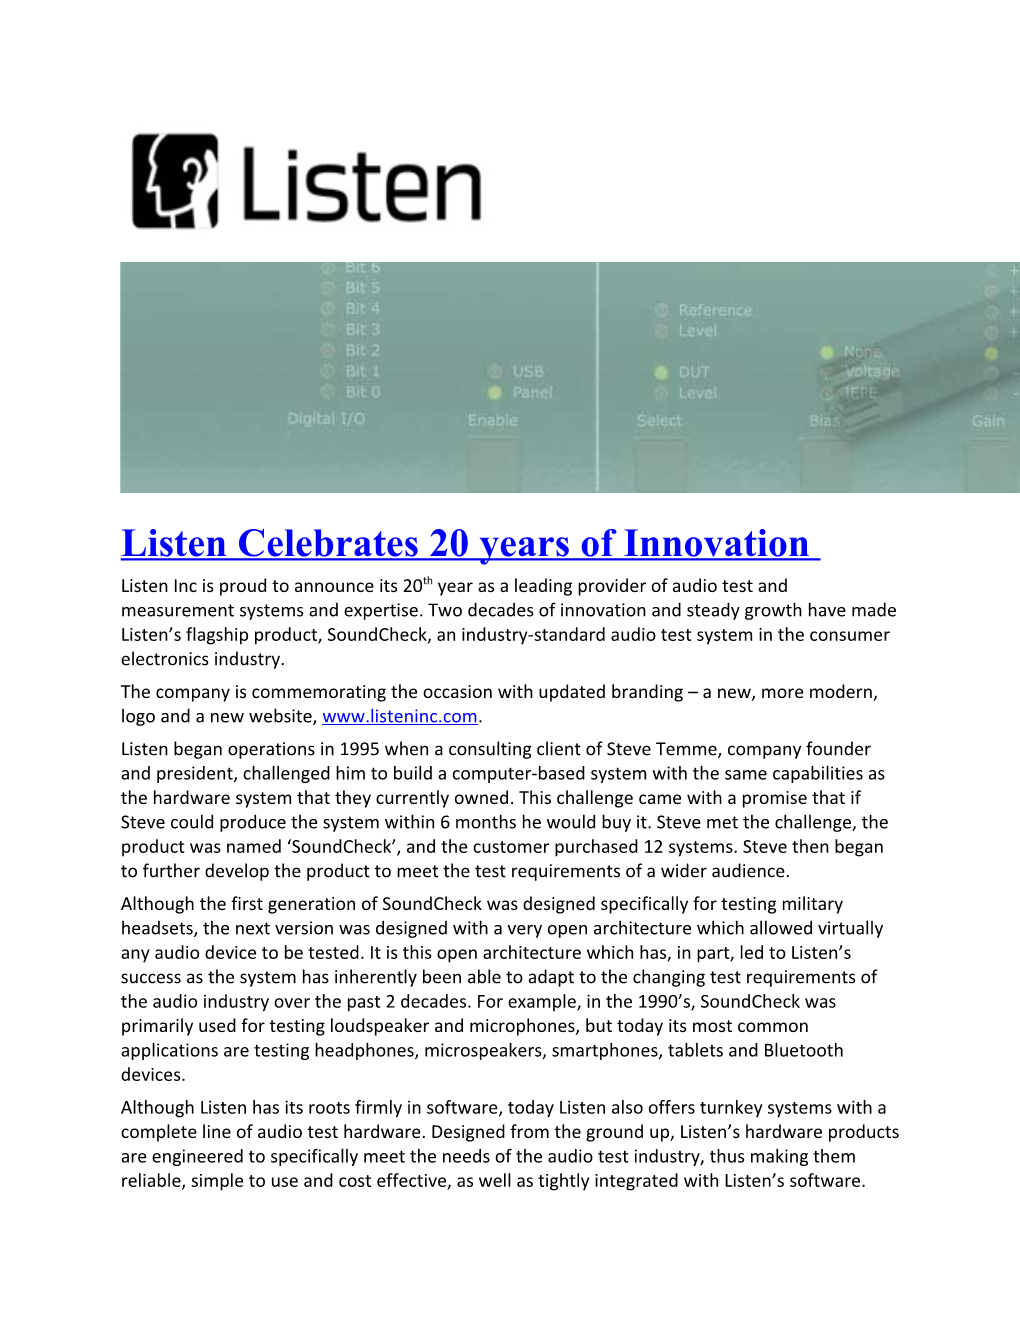 Listen Celebrates 20 Years of Innovation